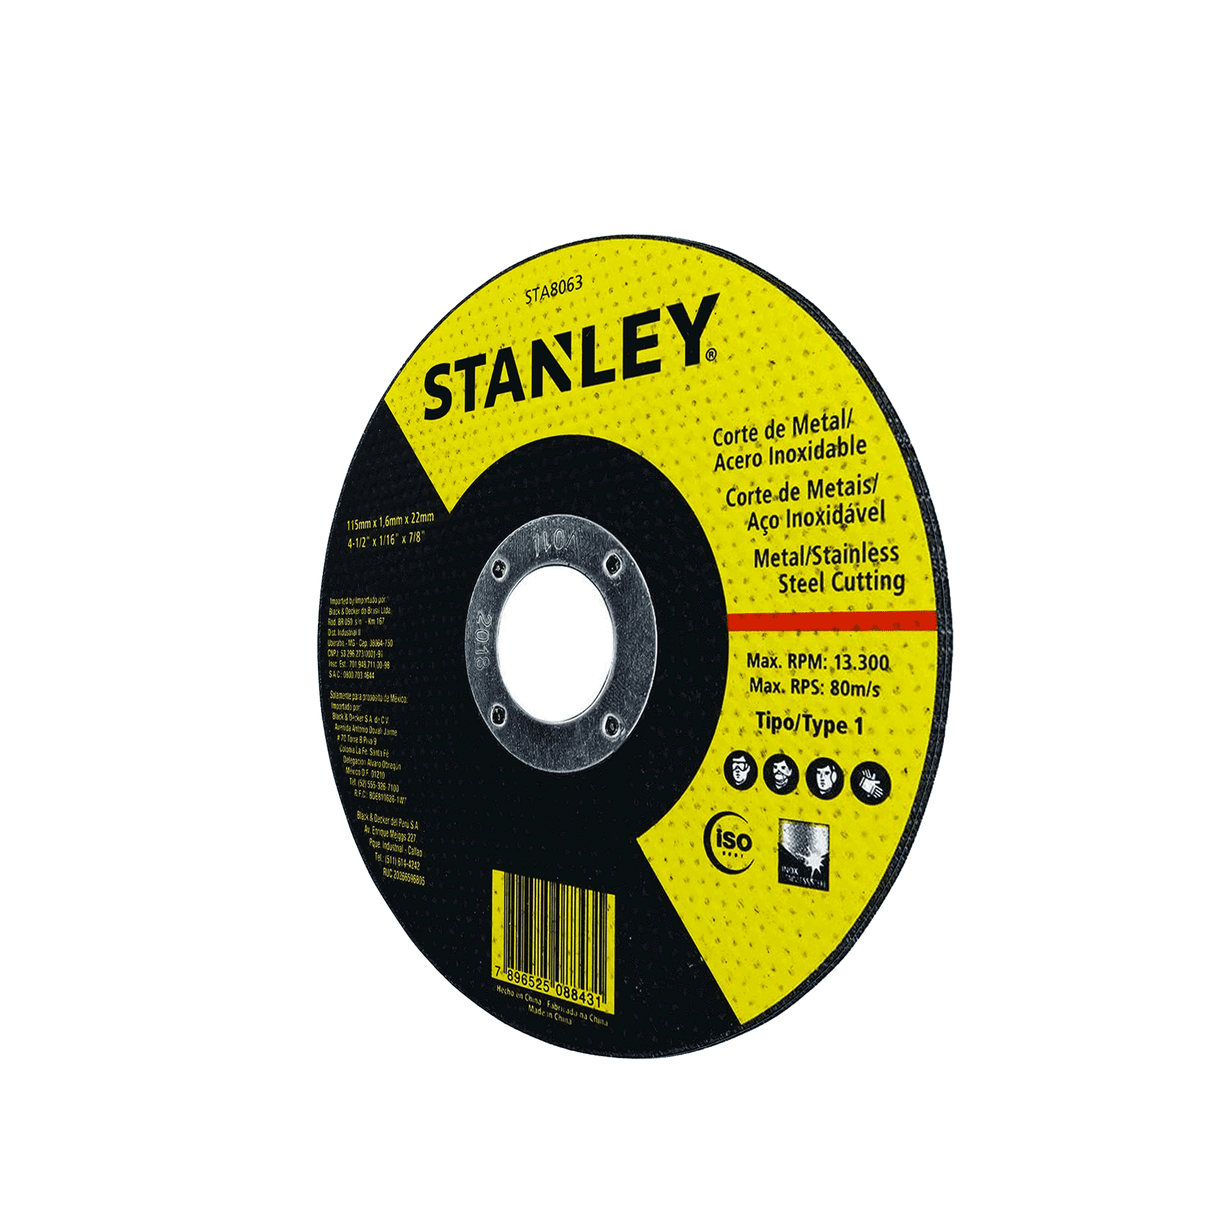 Disco Stanley STA8063 4-1/ 2X1/ 16X7/8 Corte Metal